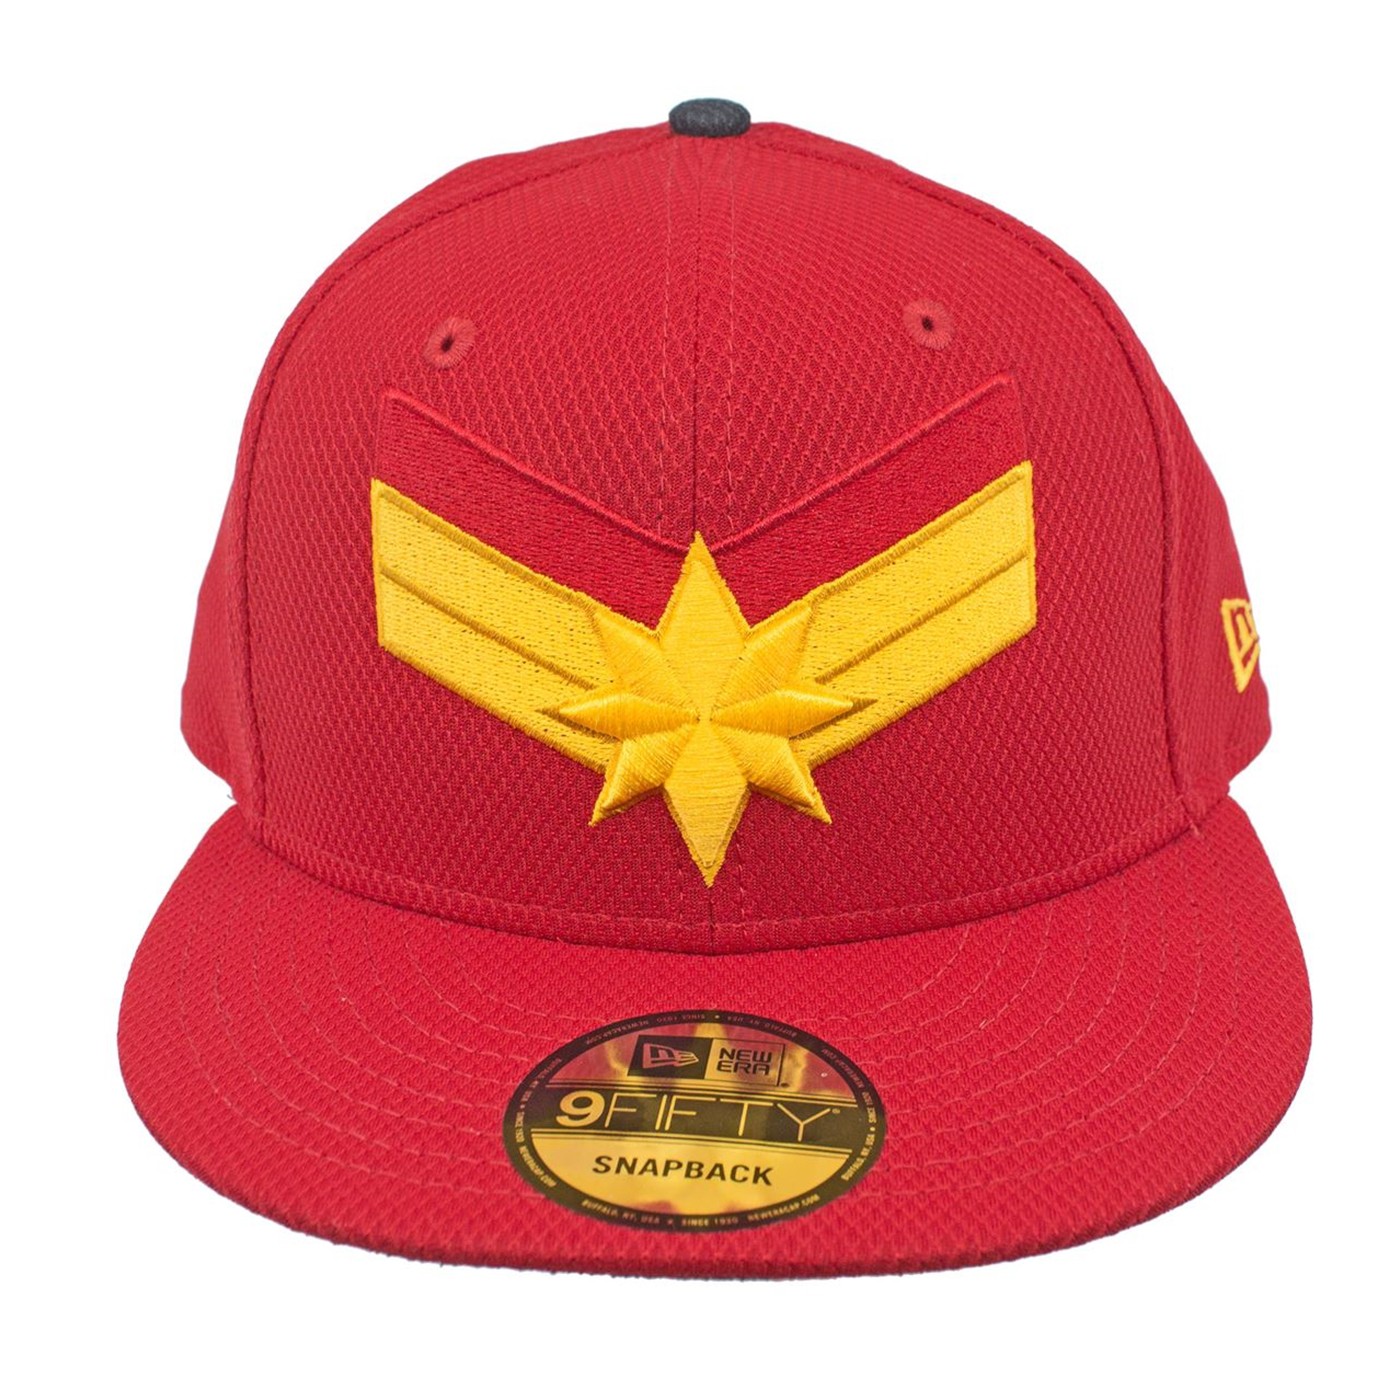 Captain Marvel Scarlet Red New Era 9Fifty Adjustable Hat